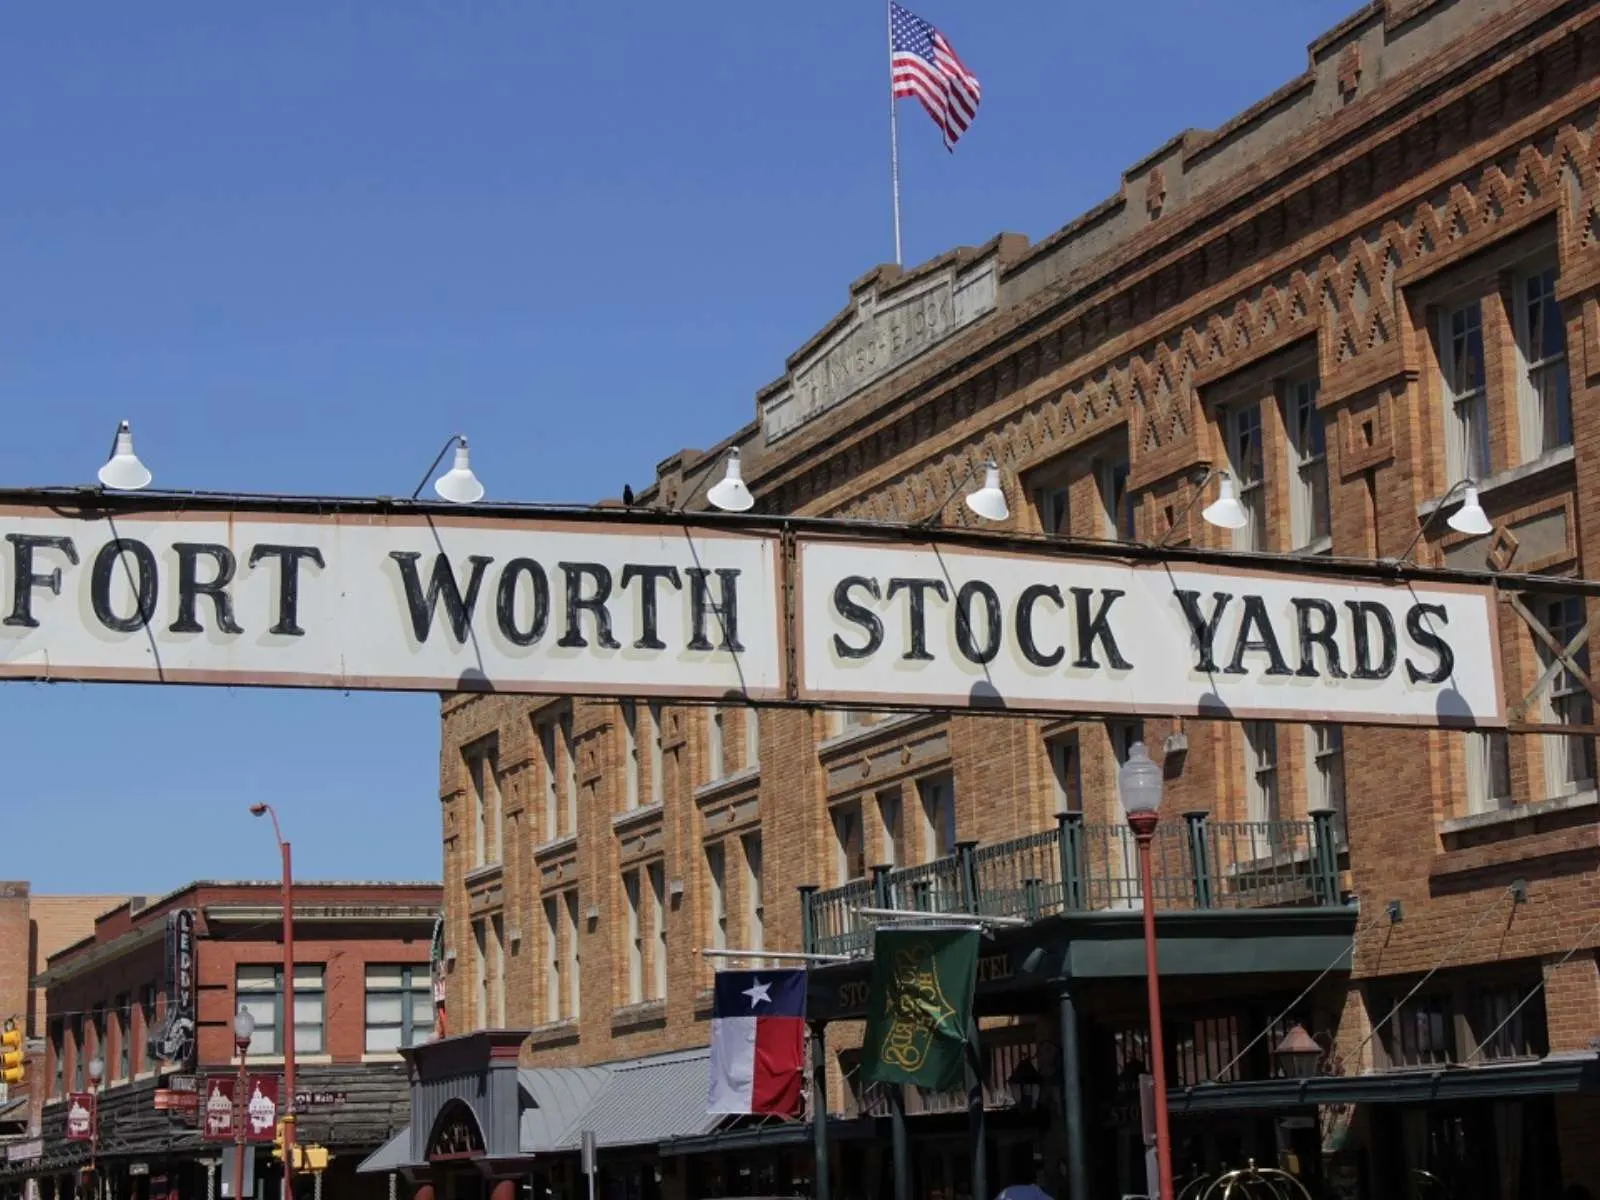 fort worth stockyards sign